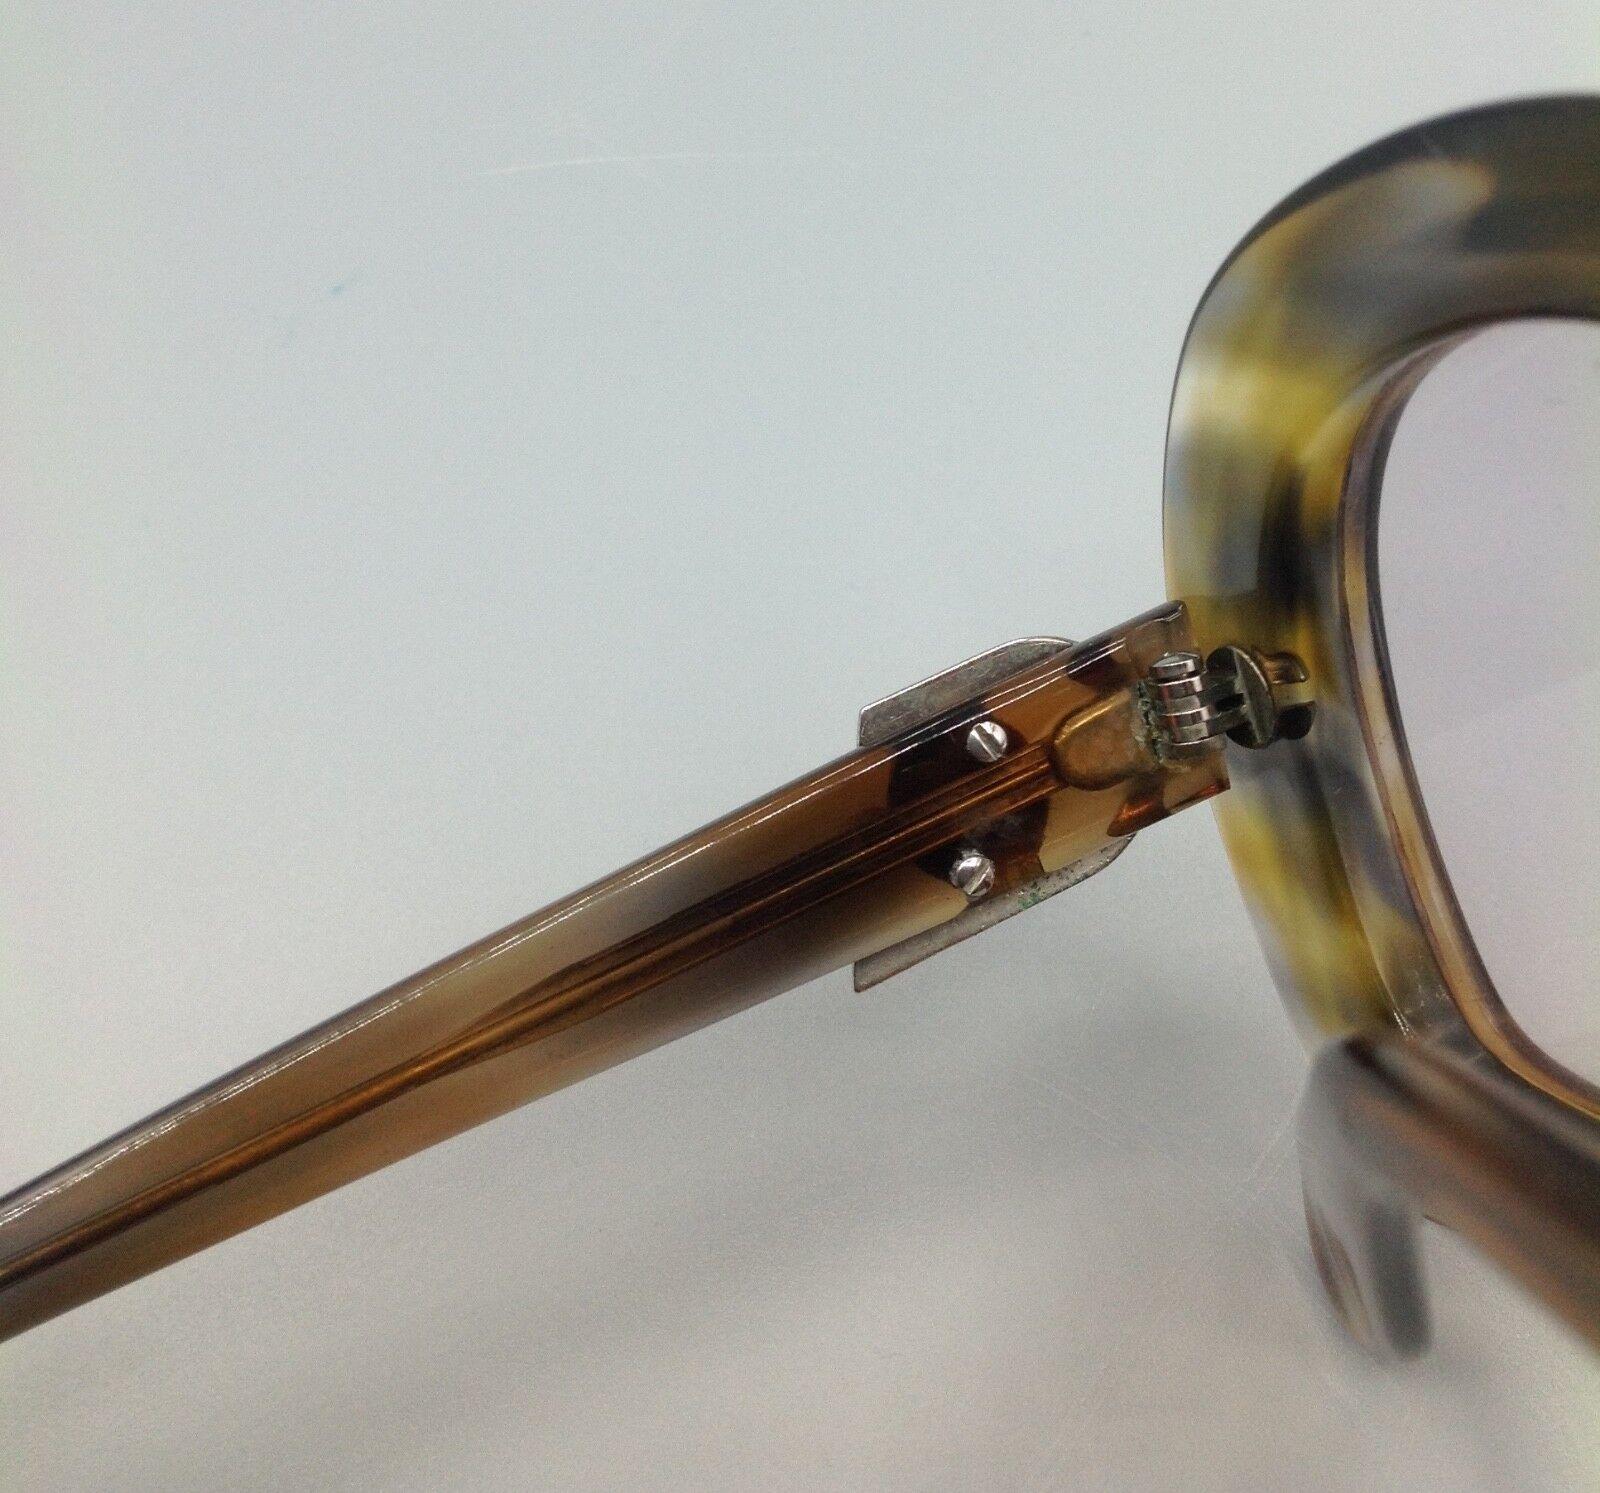 Silhouette mod.42 vintage Occhiale eyewear frame brillen gafas lunettes